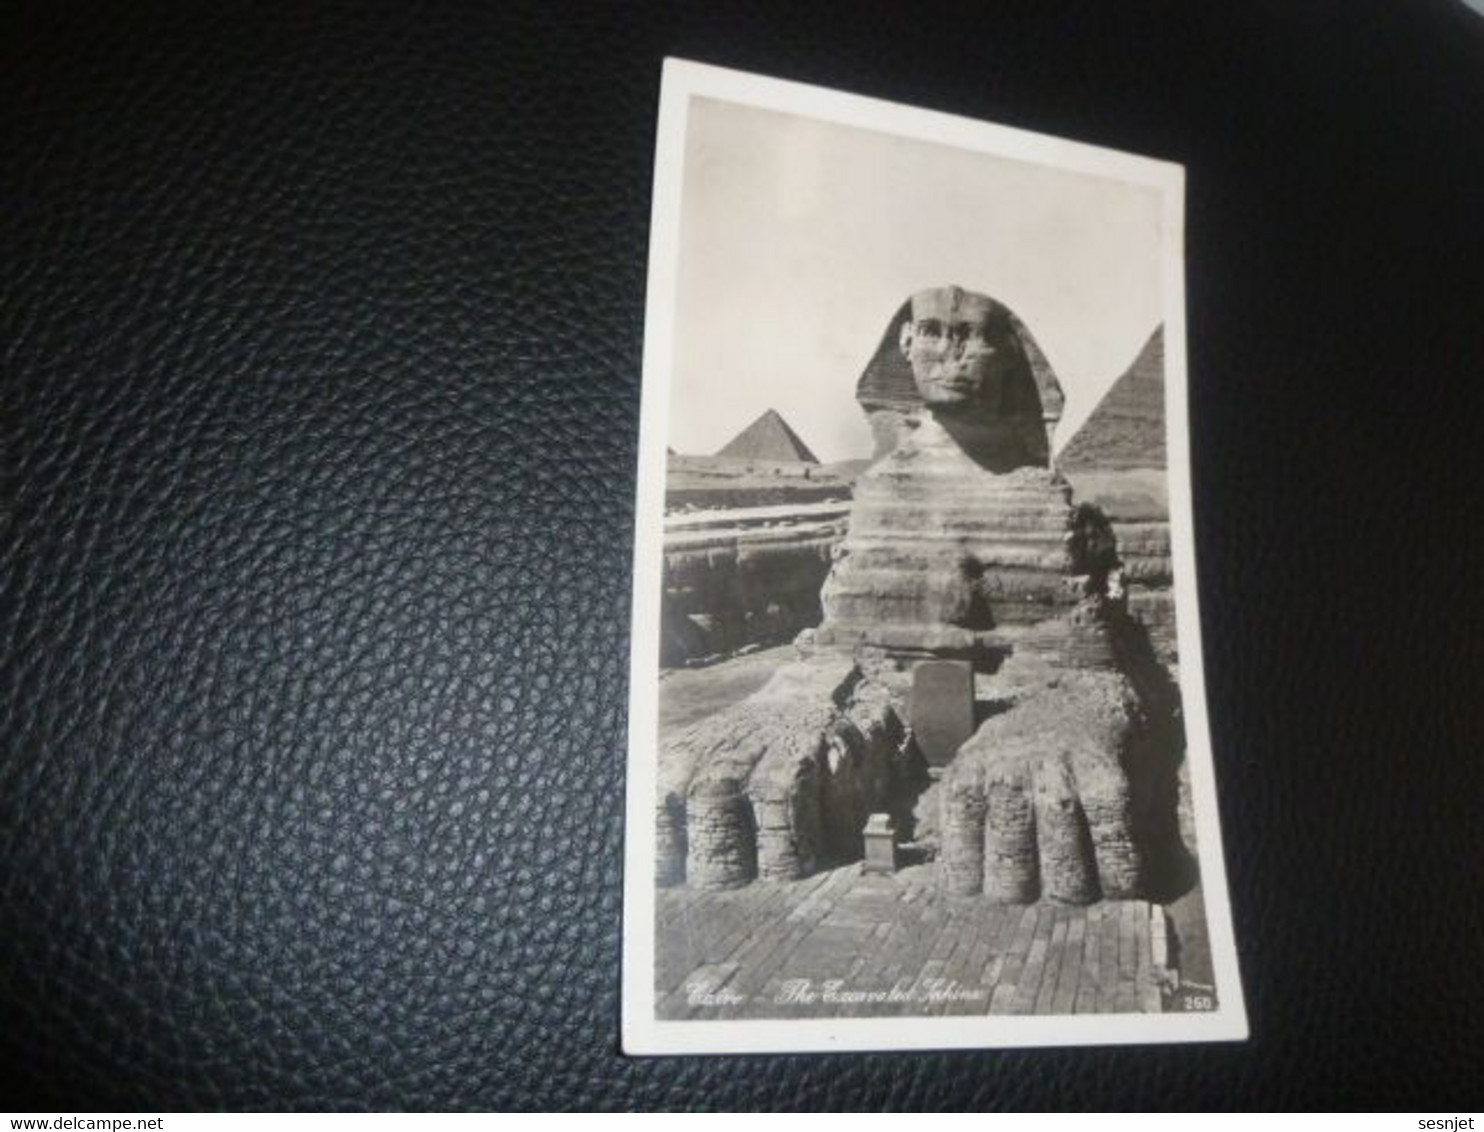 Le Caire - The Excavated Sphinx - 260 - Editions Lehnert - Landrock - Année 1960 - - Sphynx